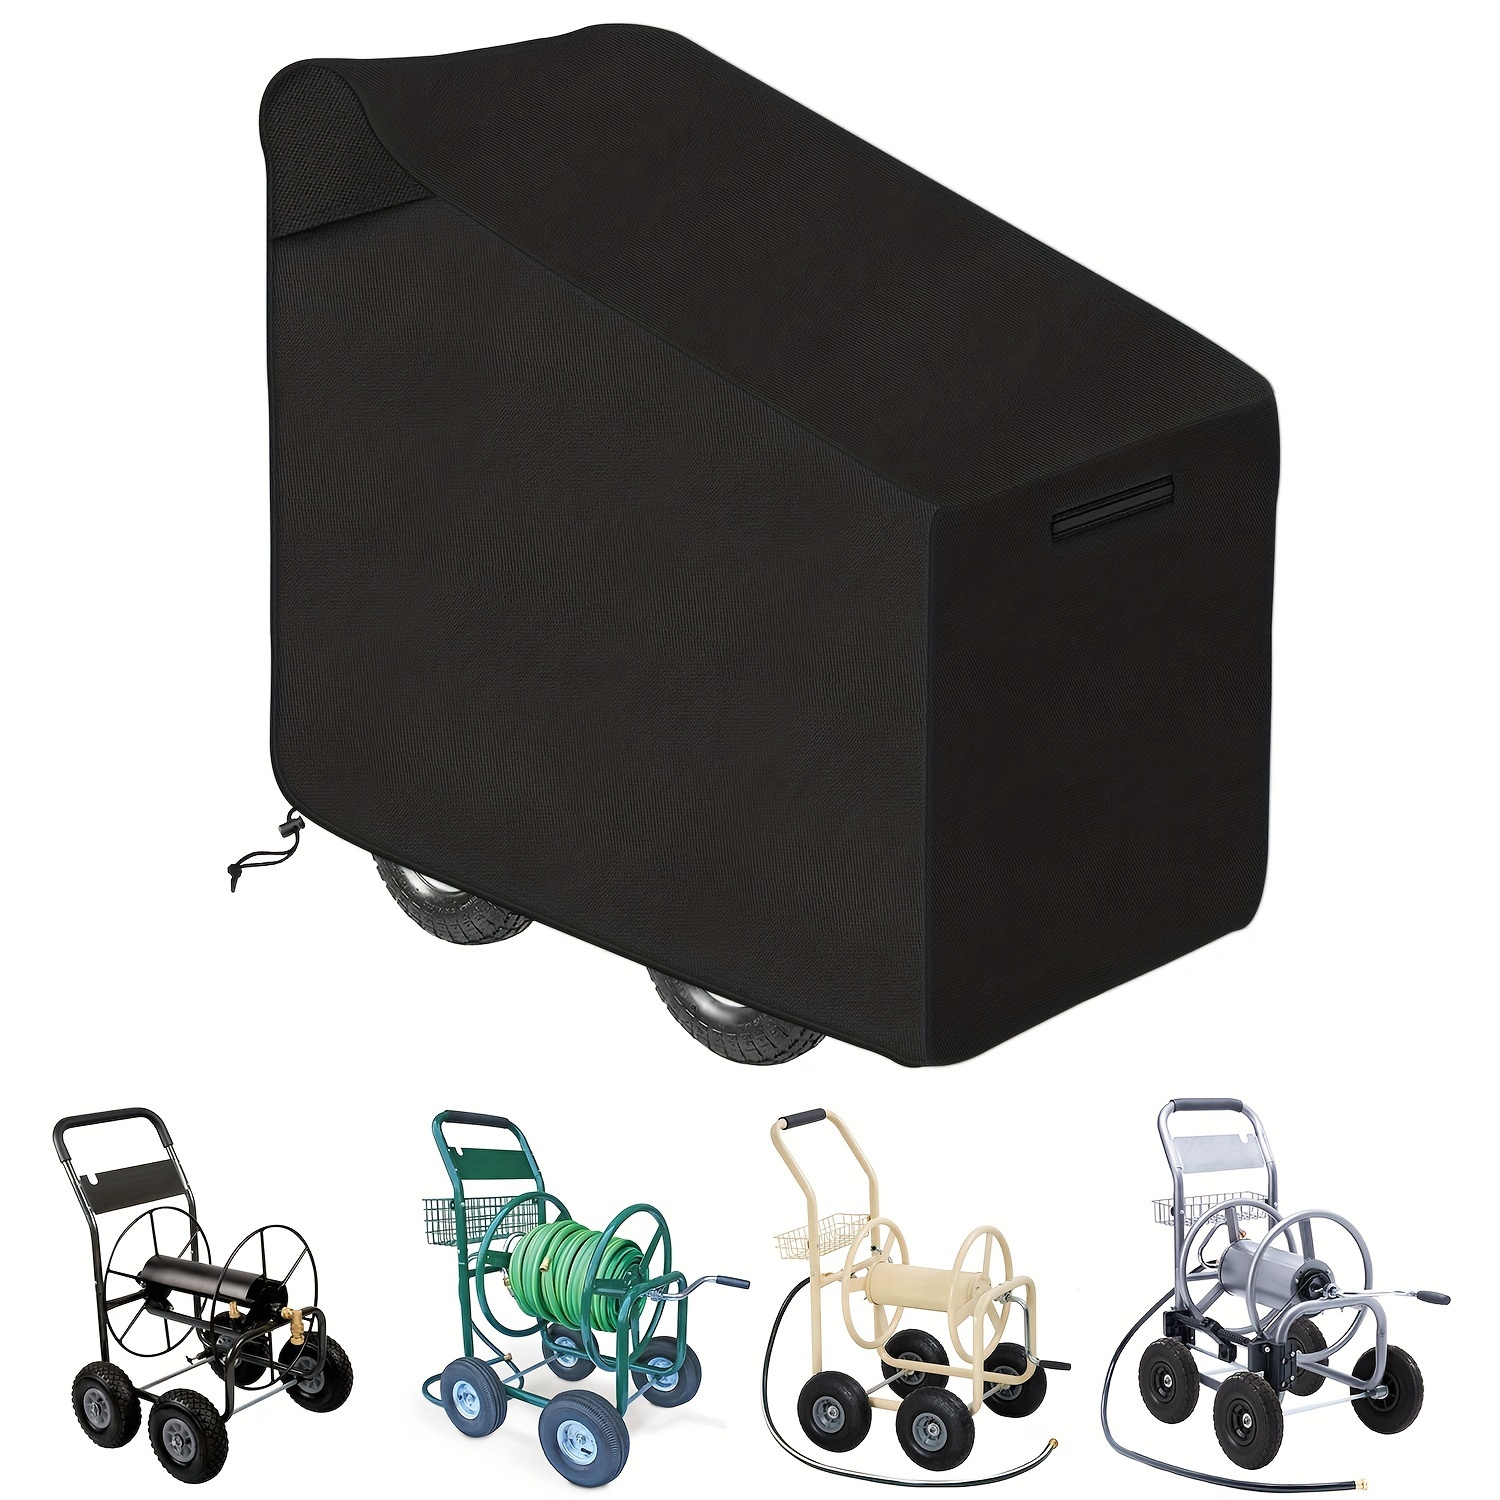 1pc Garden Hose Reel Cart Cover, Outdoor Hose Cart Covers For Hose Reel  Cart All Season Protection Waterproof Sun-Proof Dustproof Furniture Cover